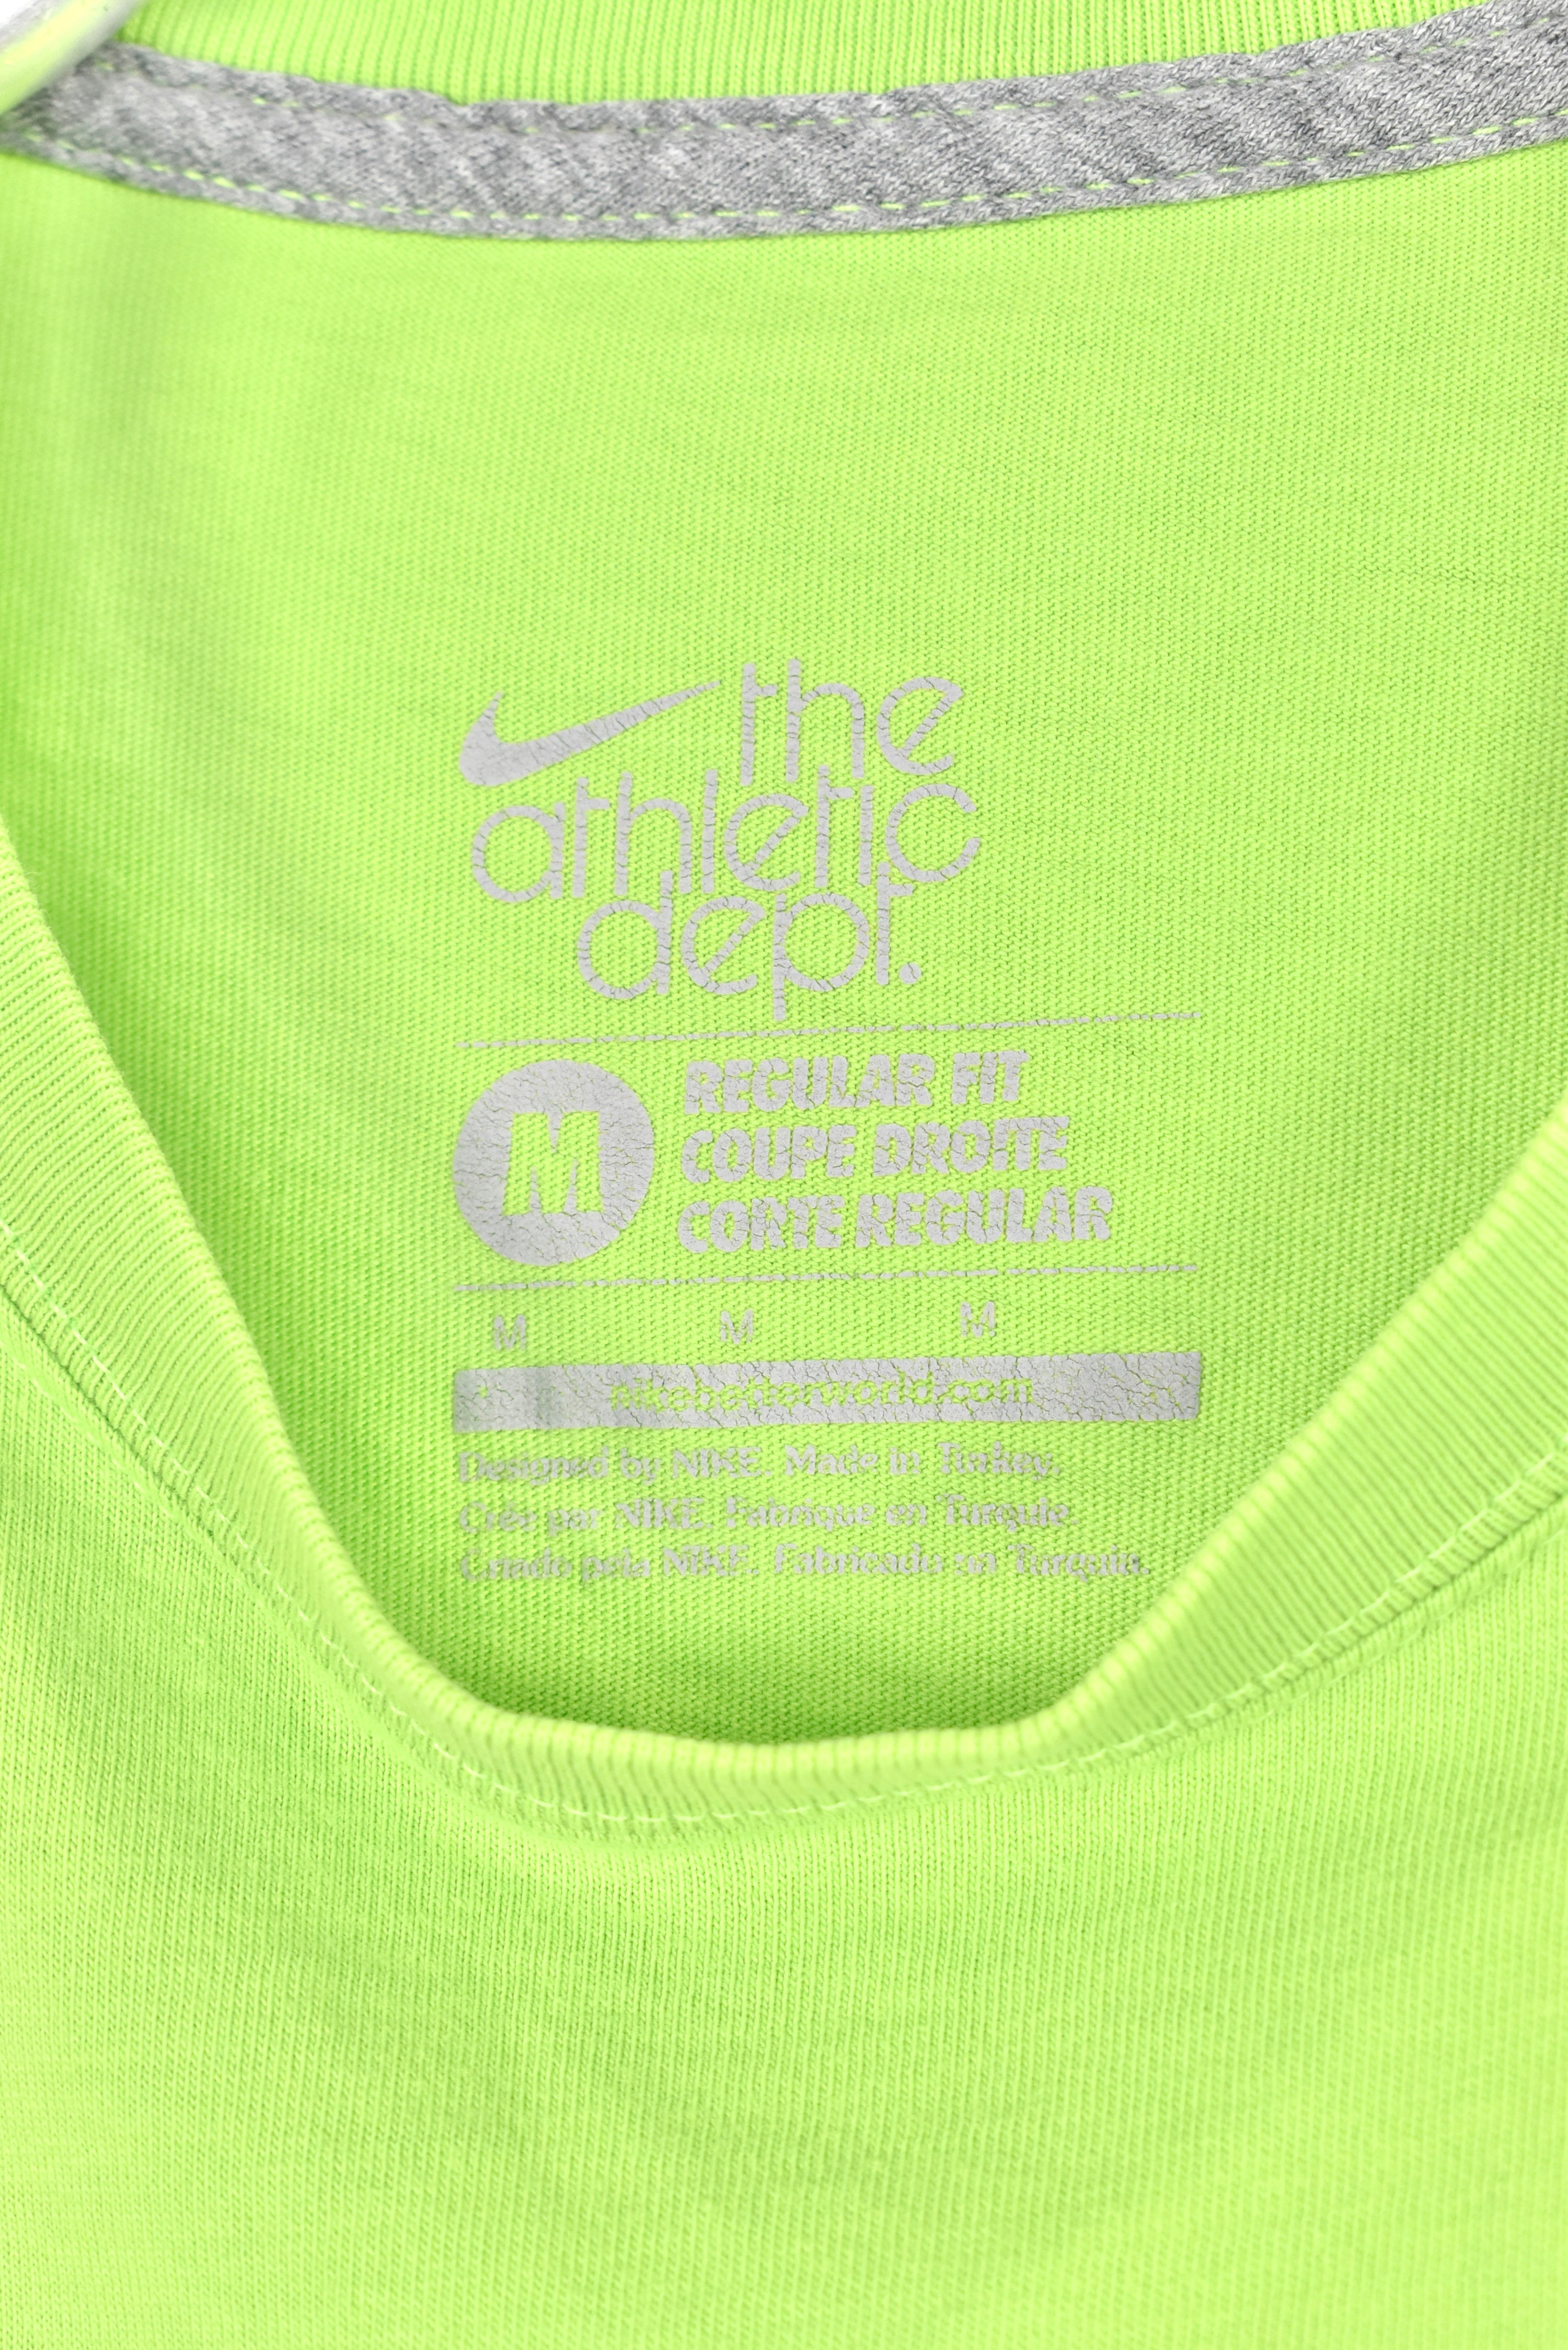 Women's modern Nike shirt, green graphic tee - AU M NIKE